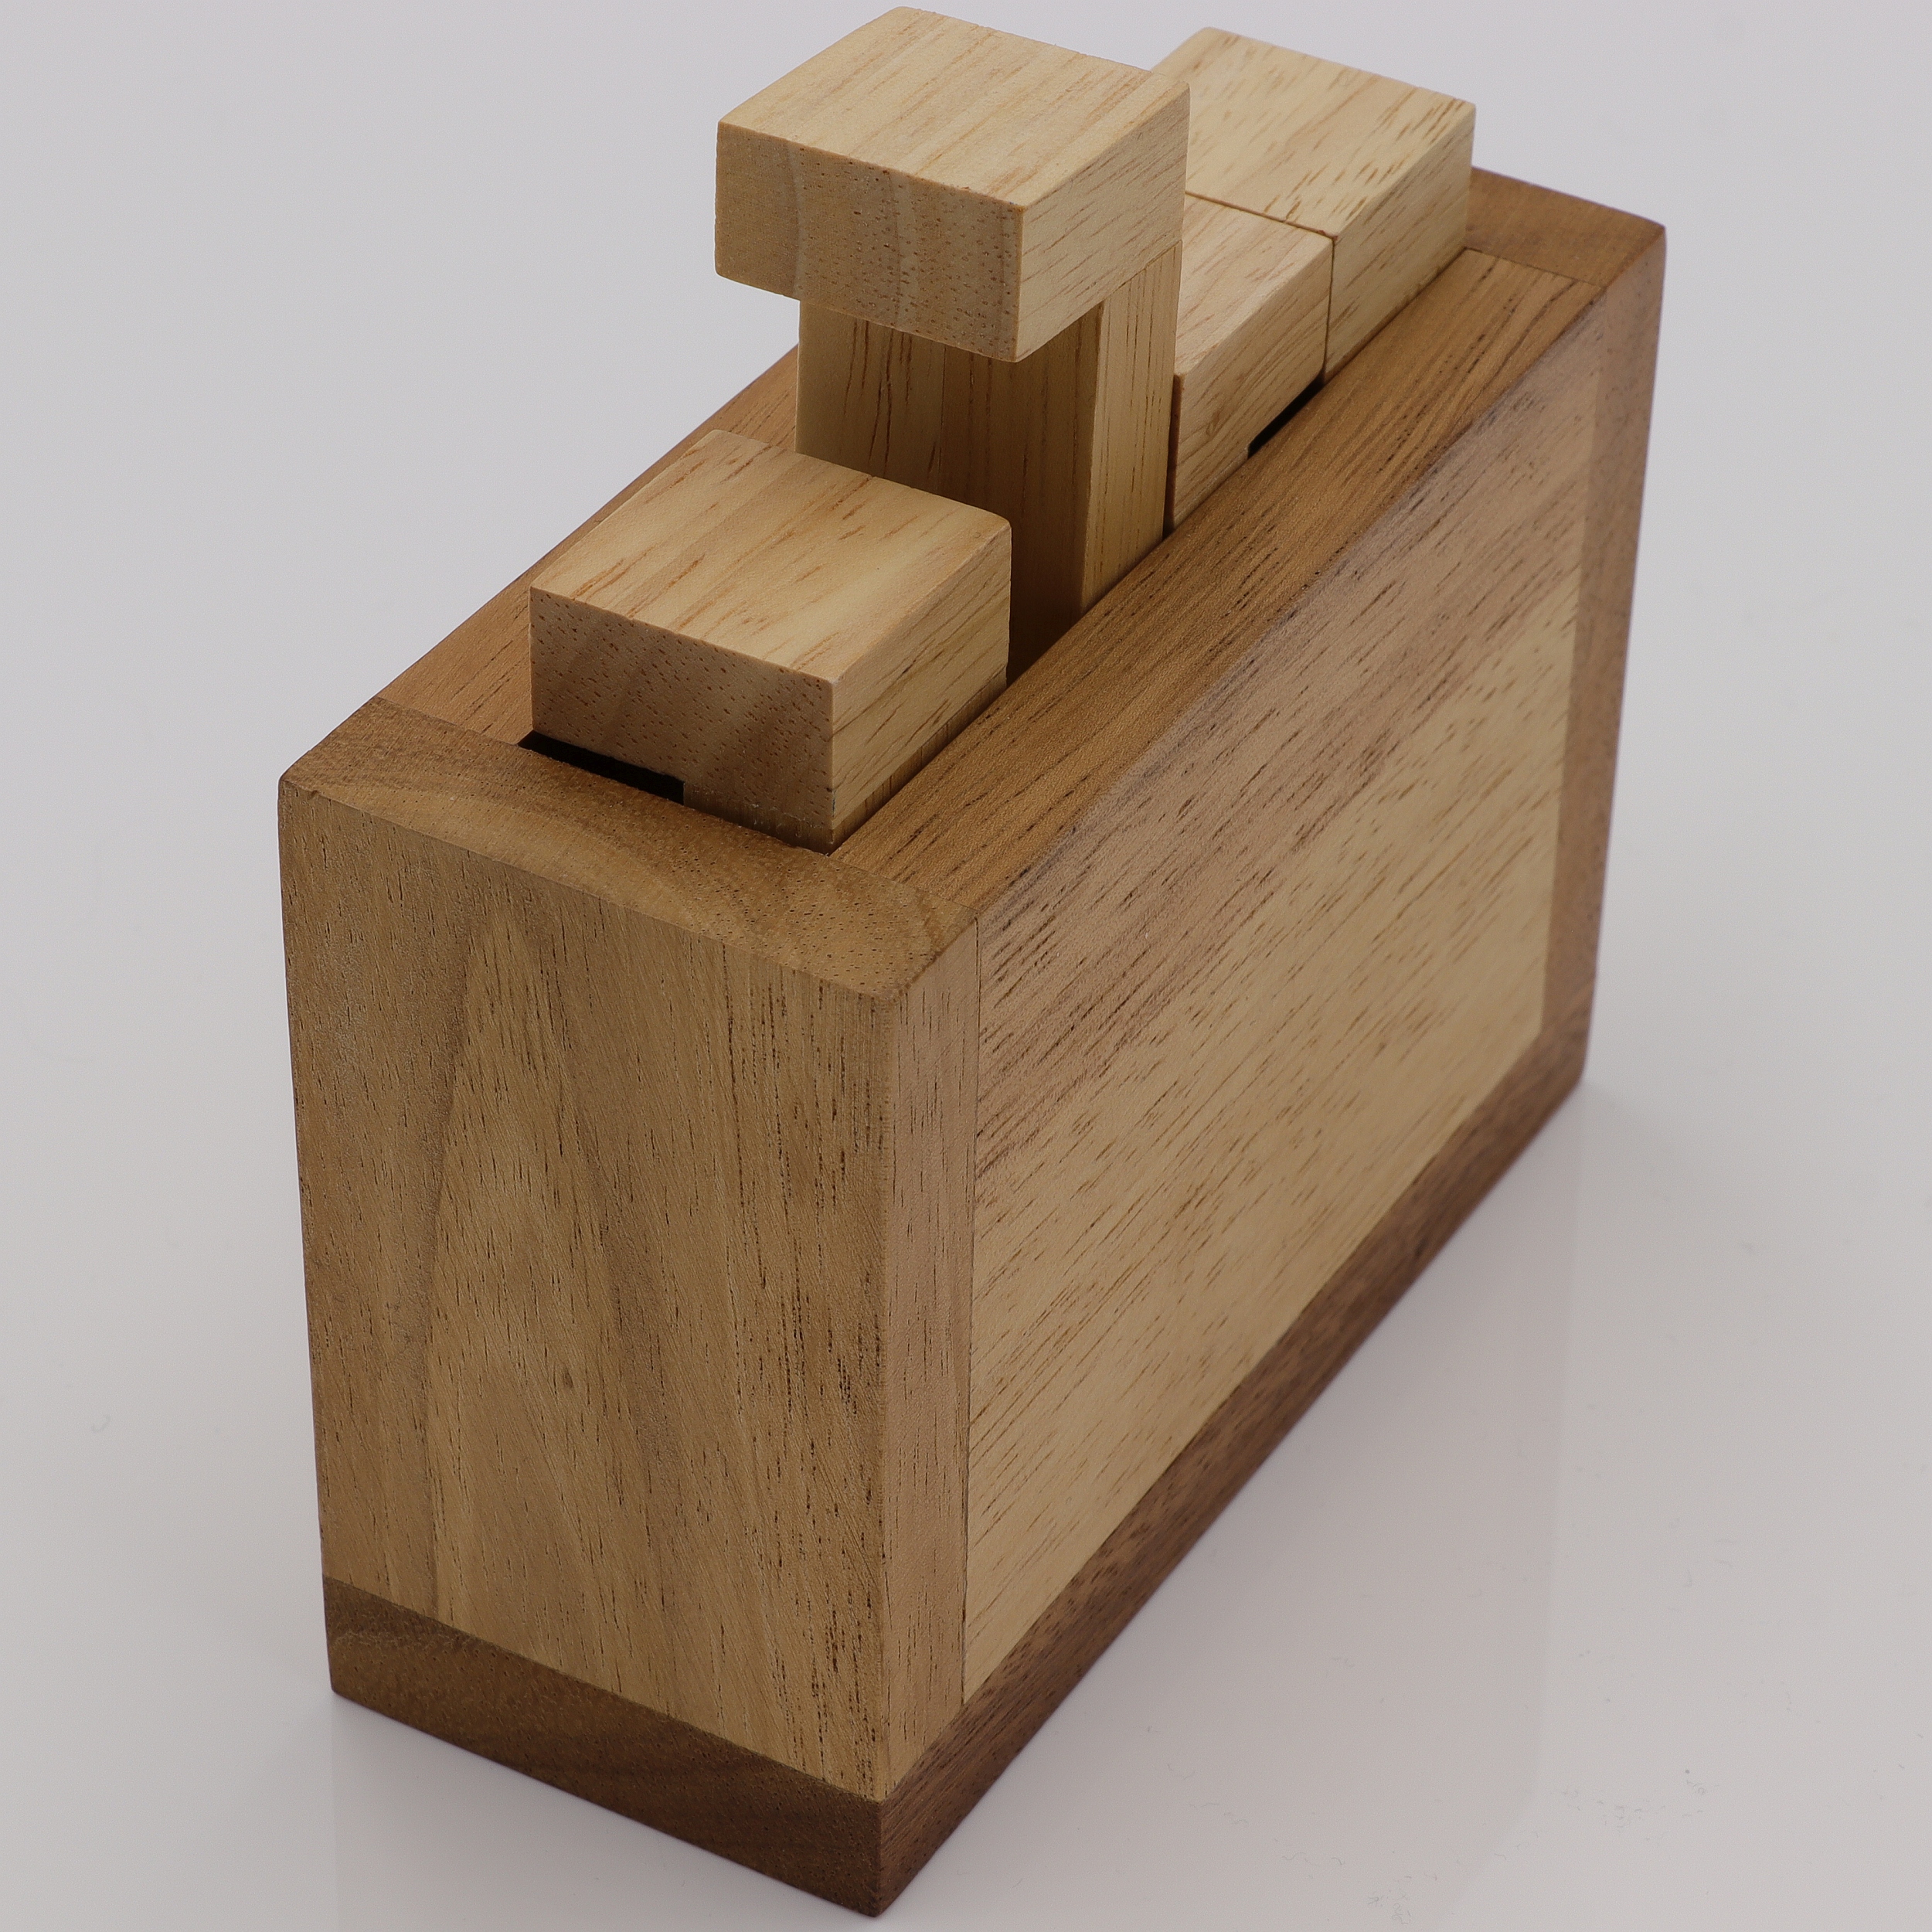 Sarcophagus - Geduldspiel aus Holz - 3D Puzzle - Sequential Disassembly Problem